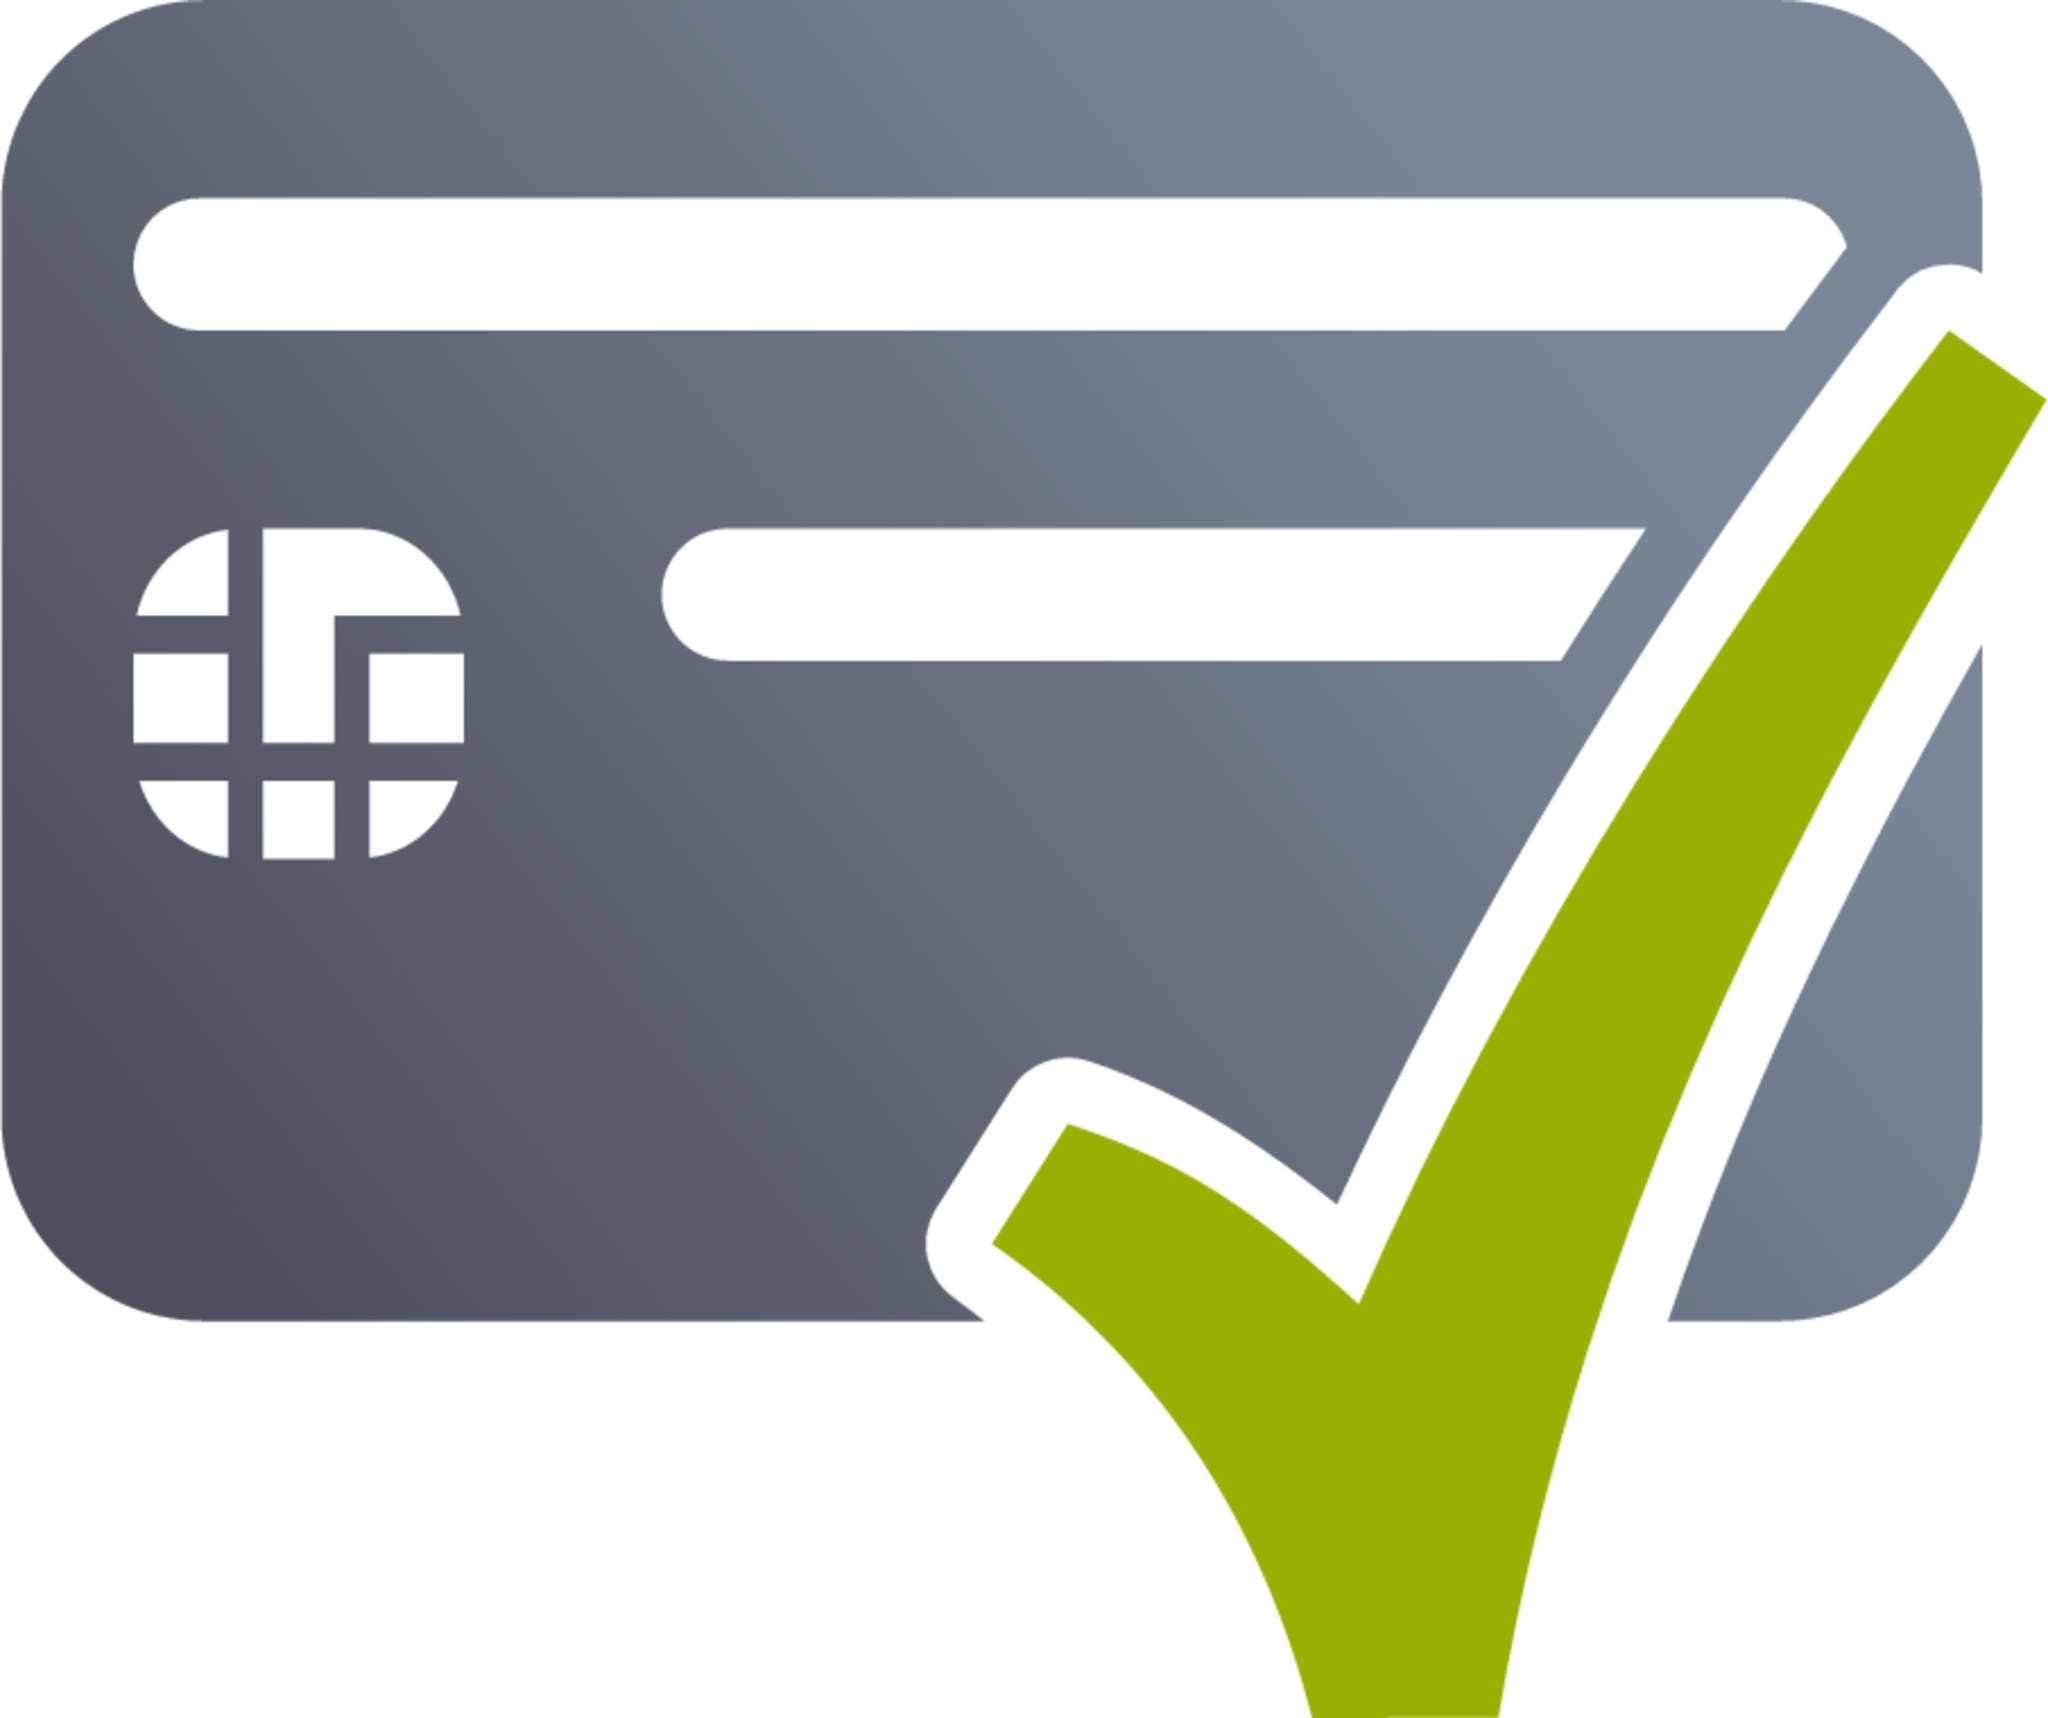 chipcard active icon